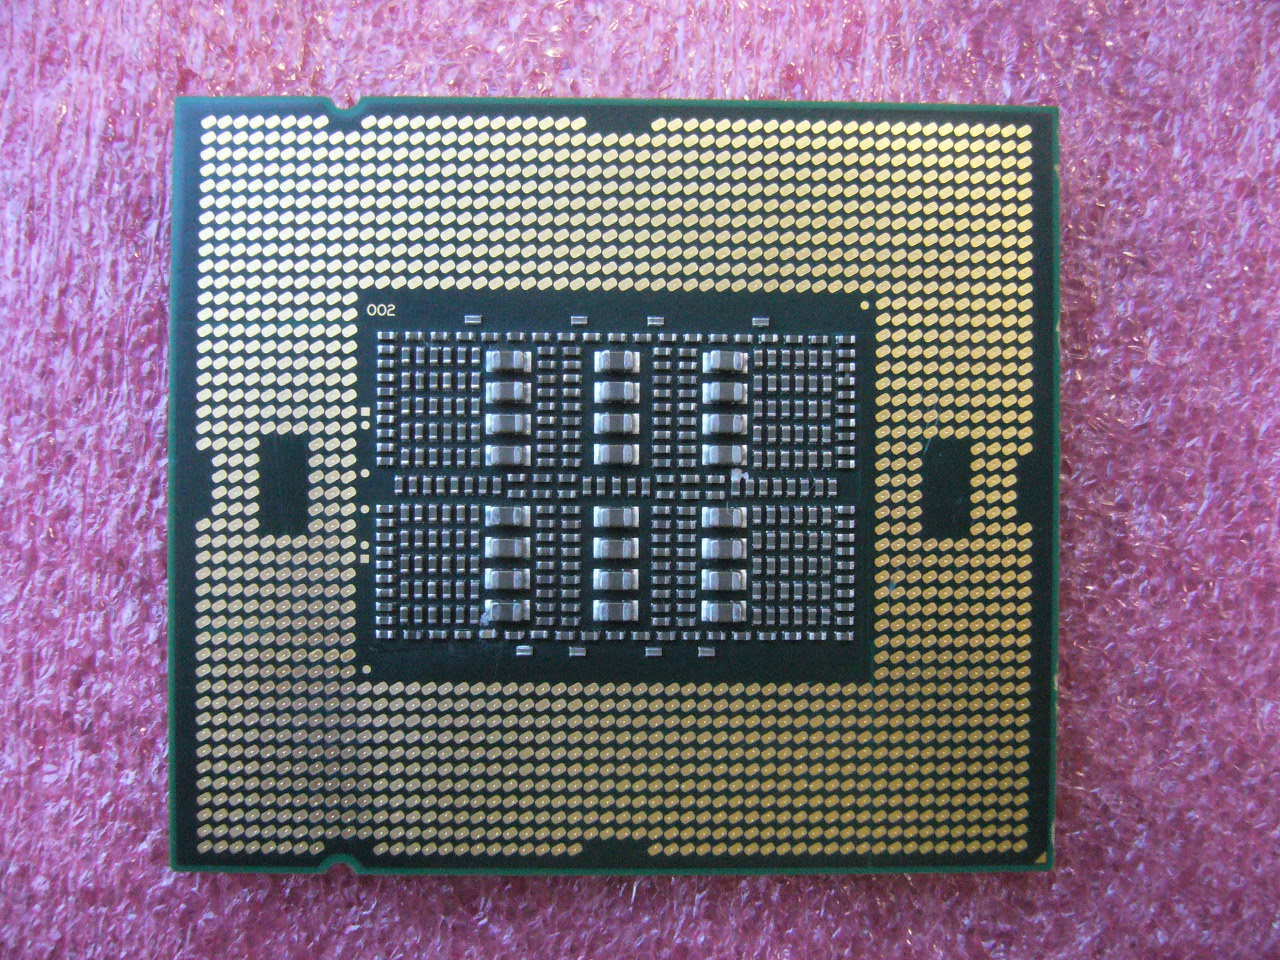 QTY 1x INTEL Eight-Cores CPU X7560 2.26GHZ/24MB 6.4GT/s QPI LGA1567 SLBRD - Click Image to Close